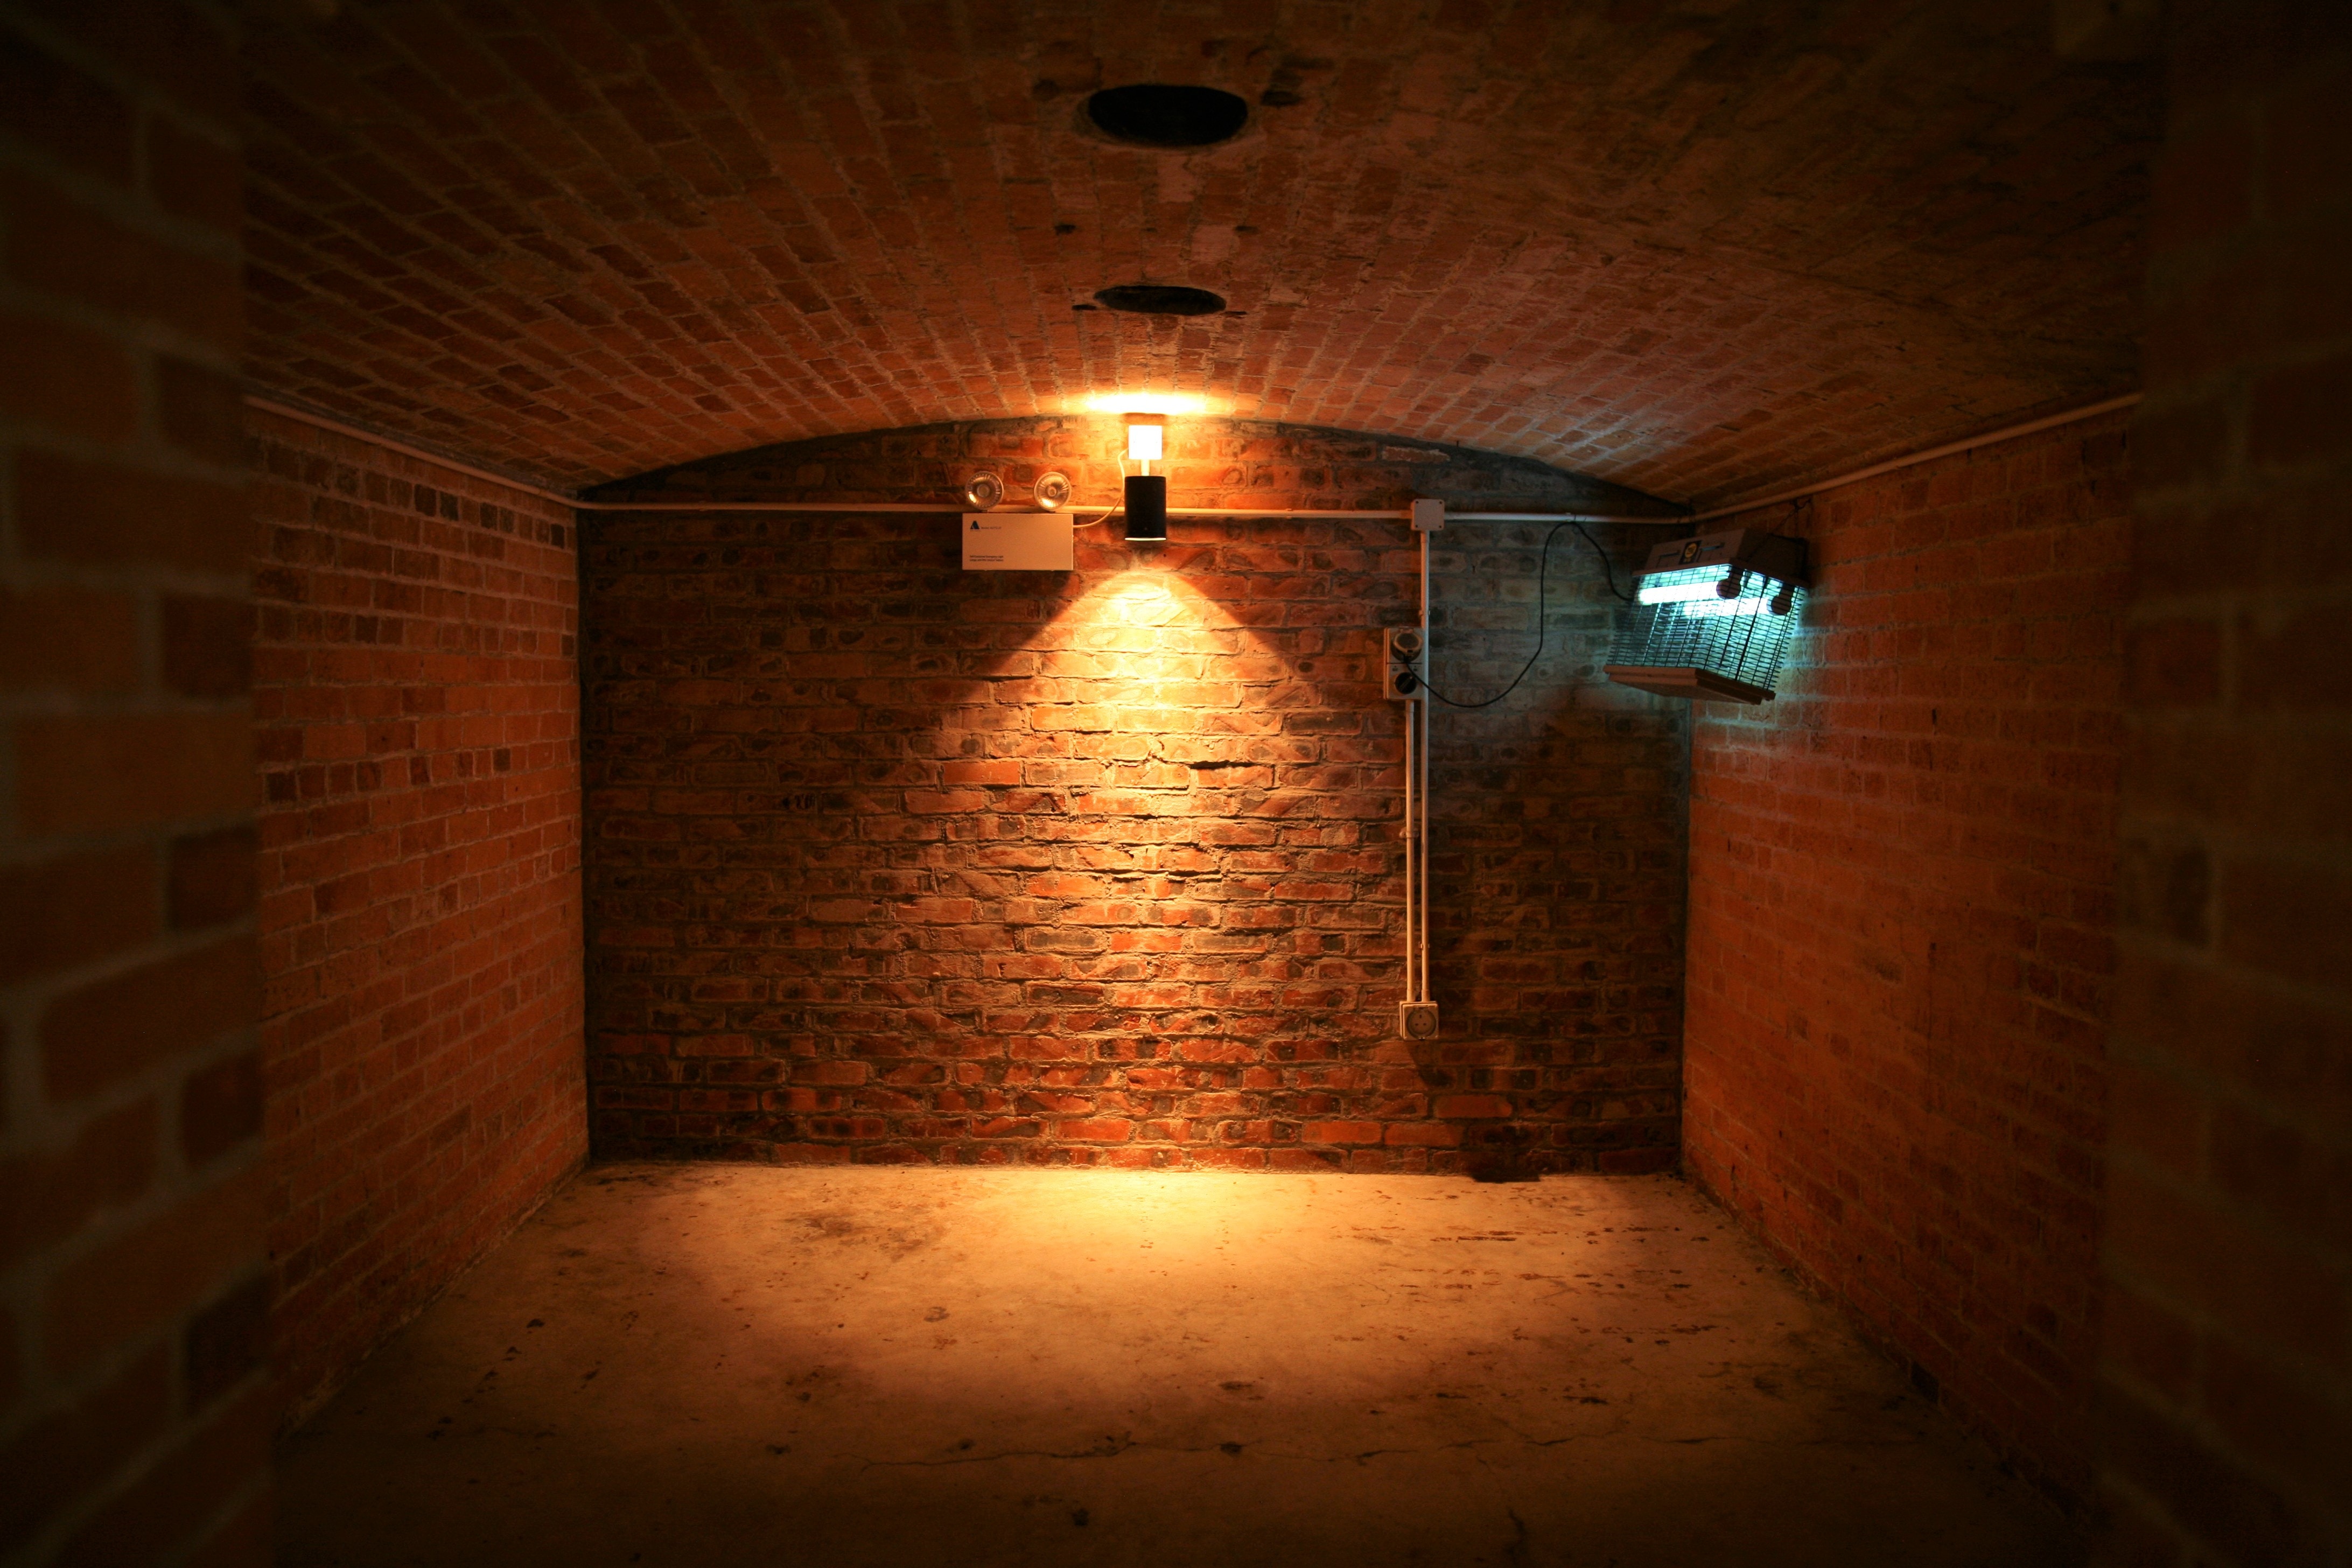 Brick room with dead end; image by Kdwk Leung, via Unsplash.com.